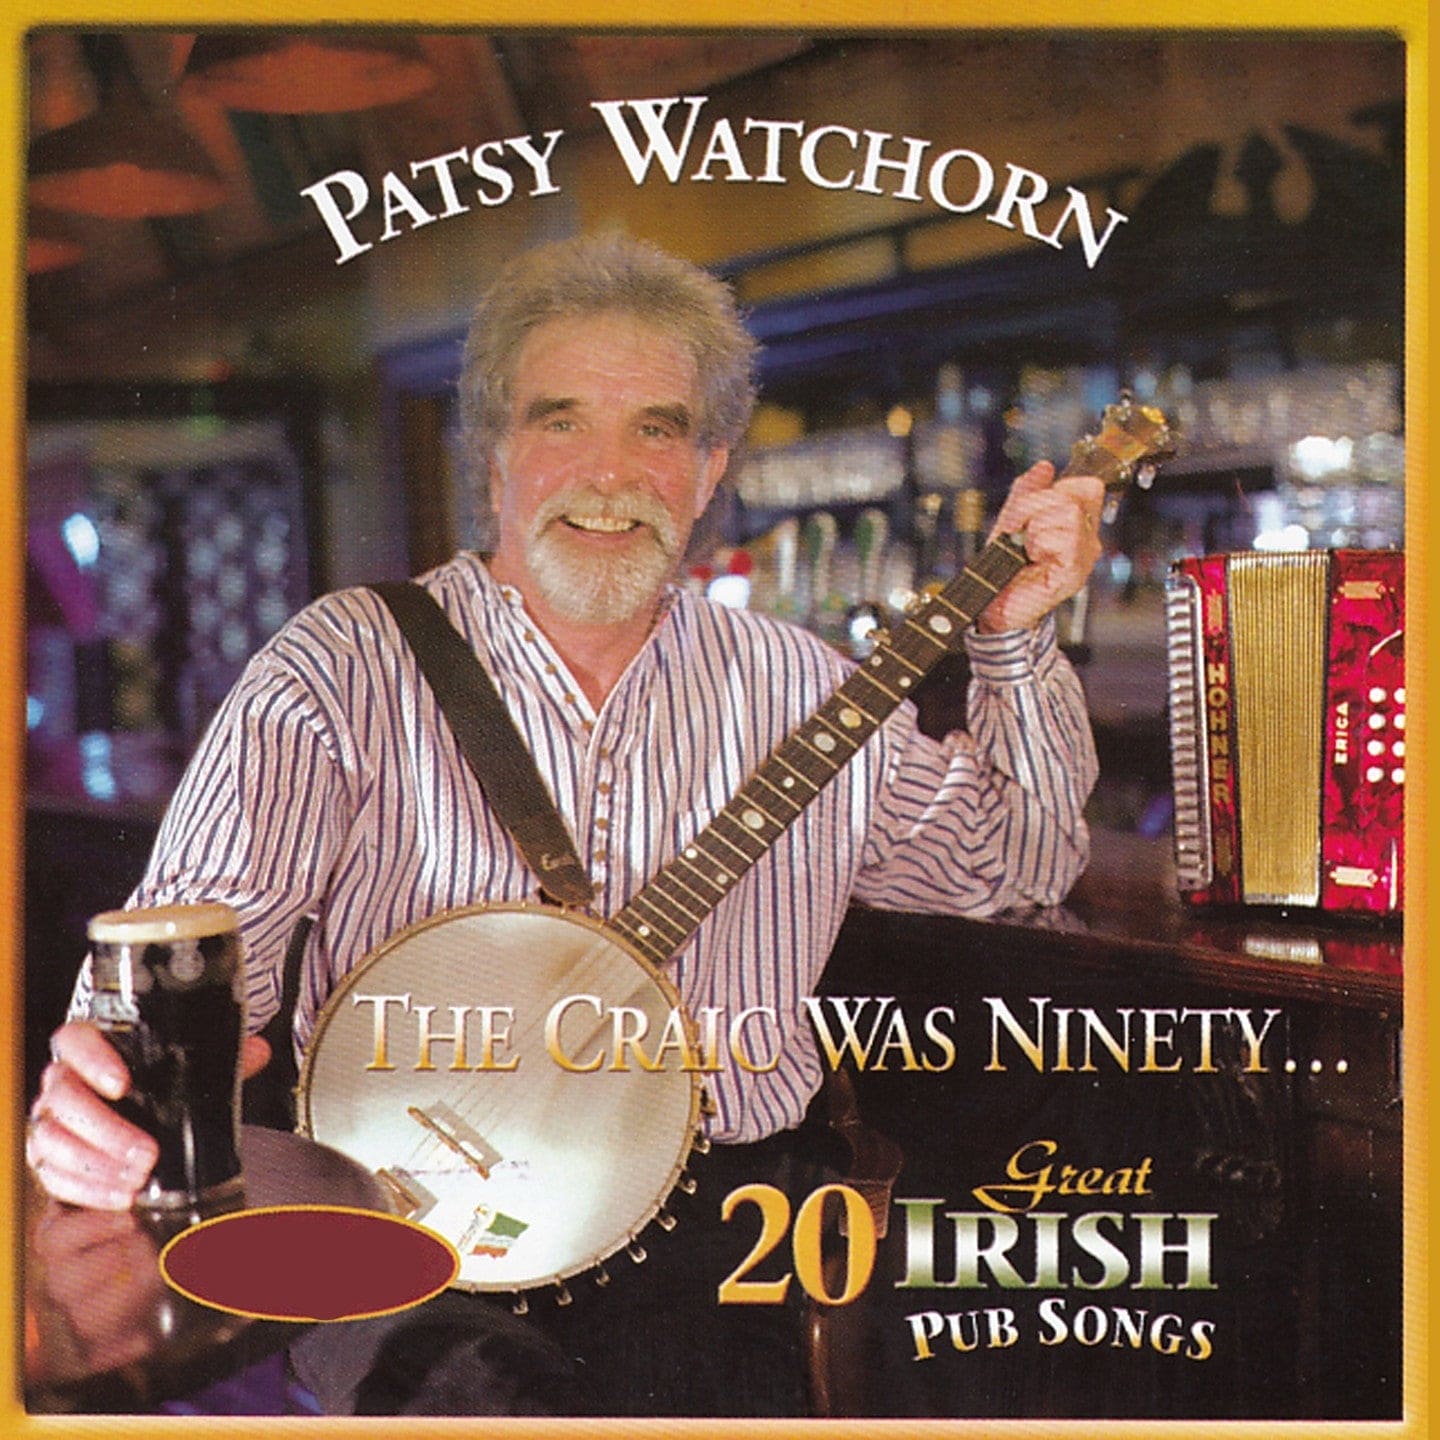 The Craic Was Ninety - Patsy Watchorn [CD]